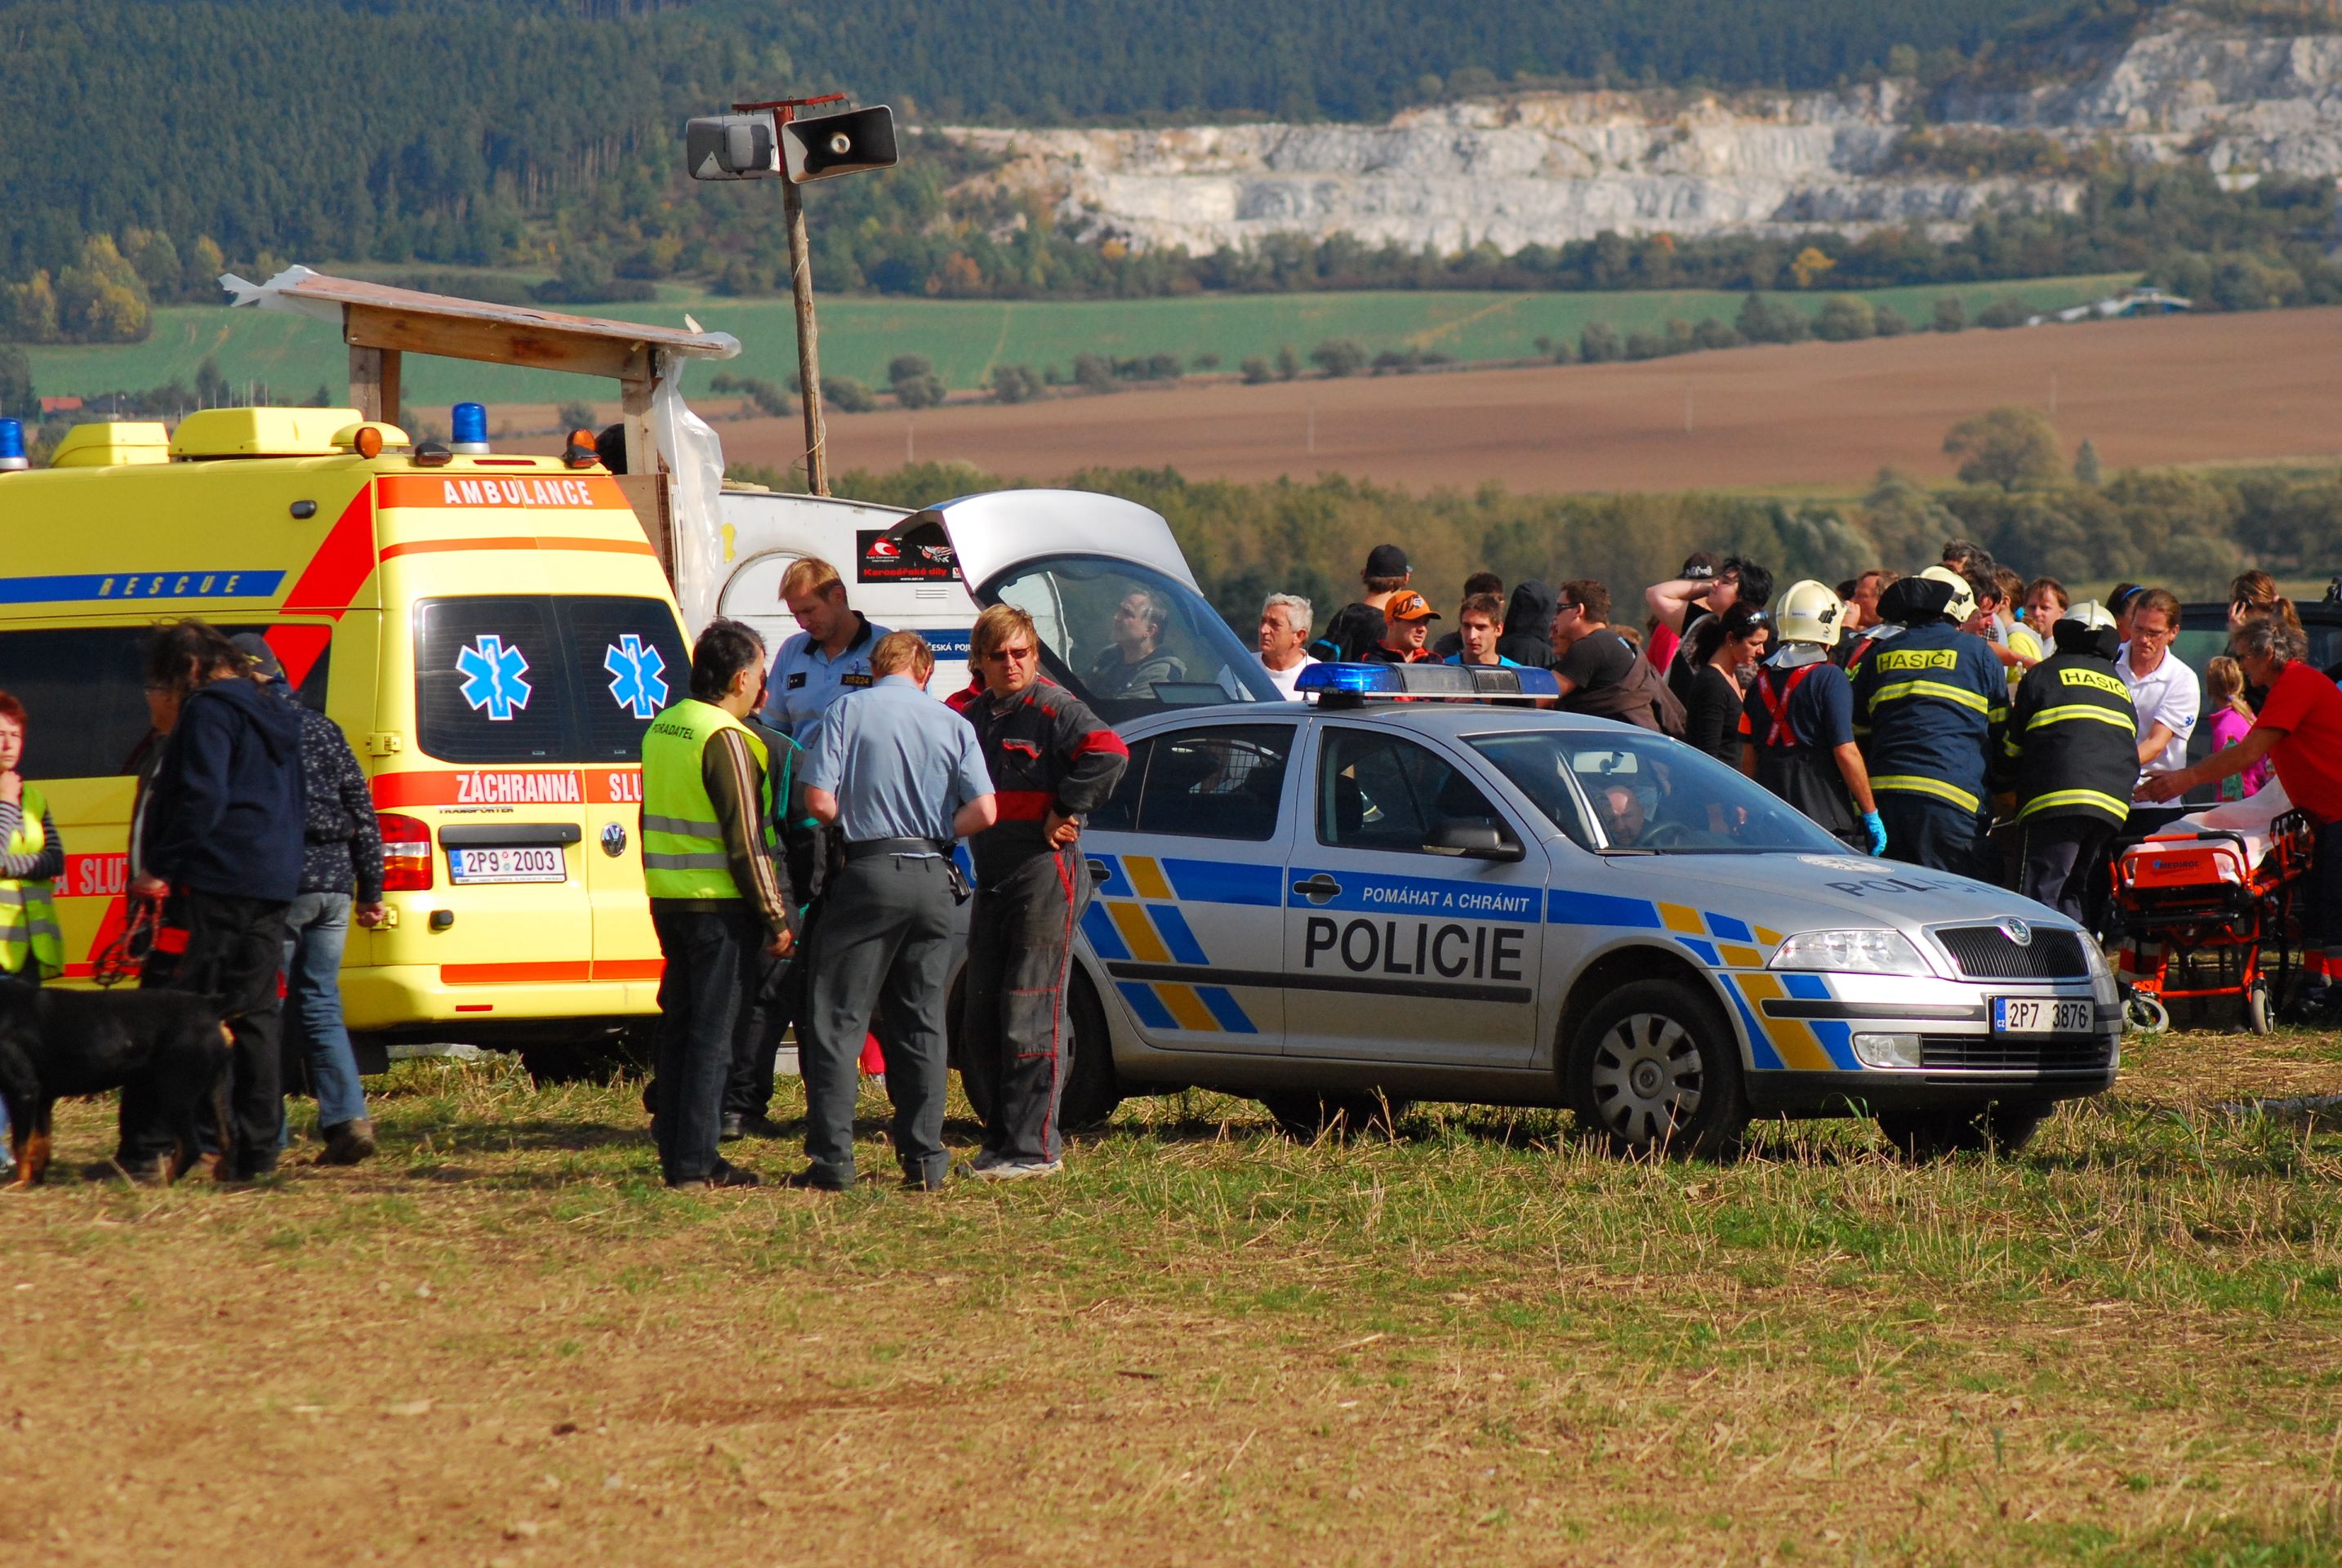 Nehoda na závodech - 11 - GALERIE - Nehoda na závodech U Rabí na Klatovsku (11/28)